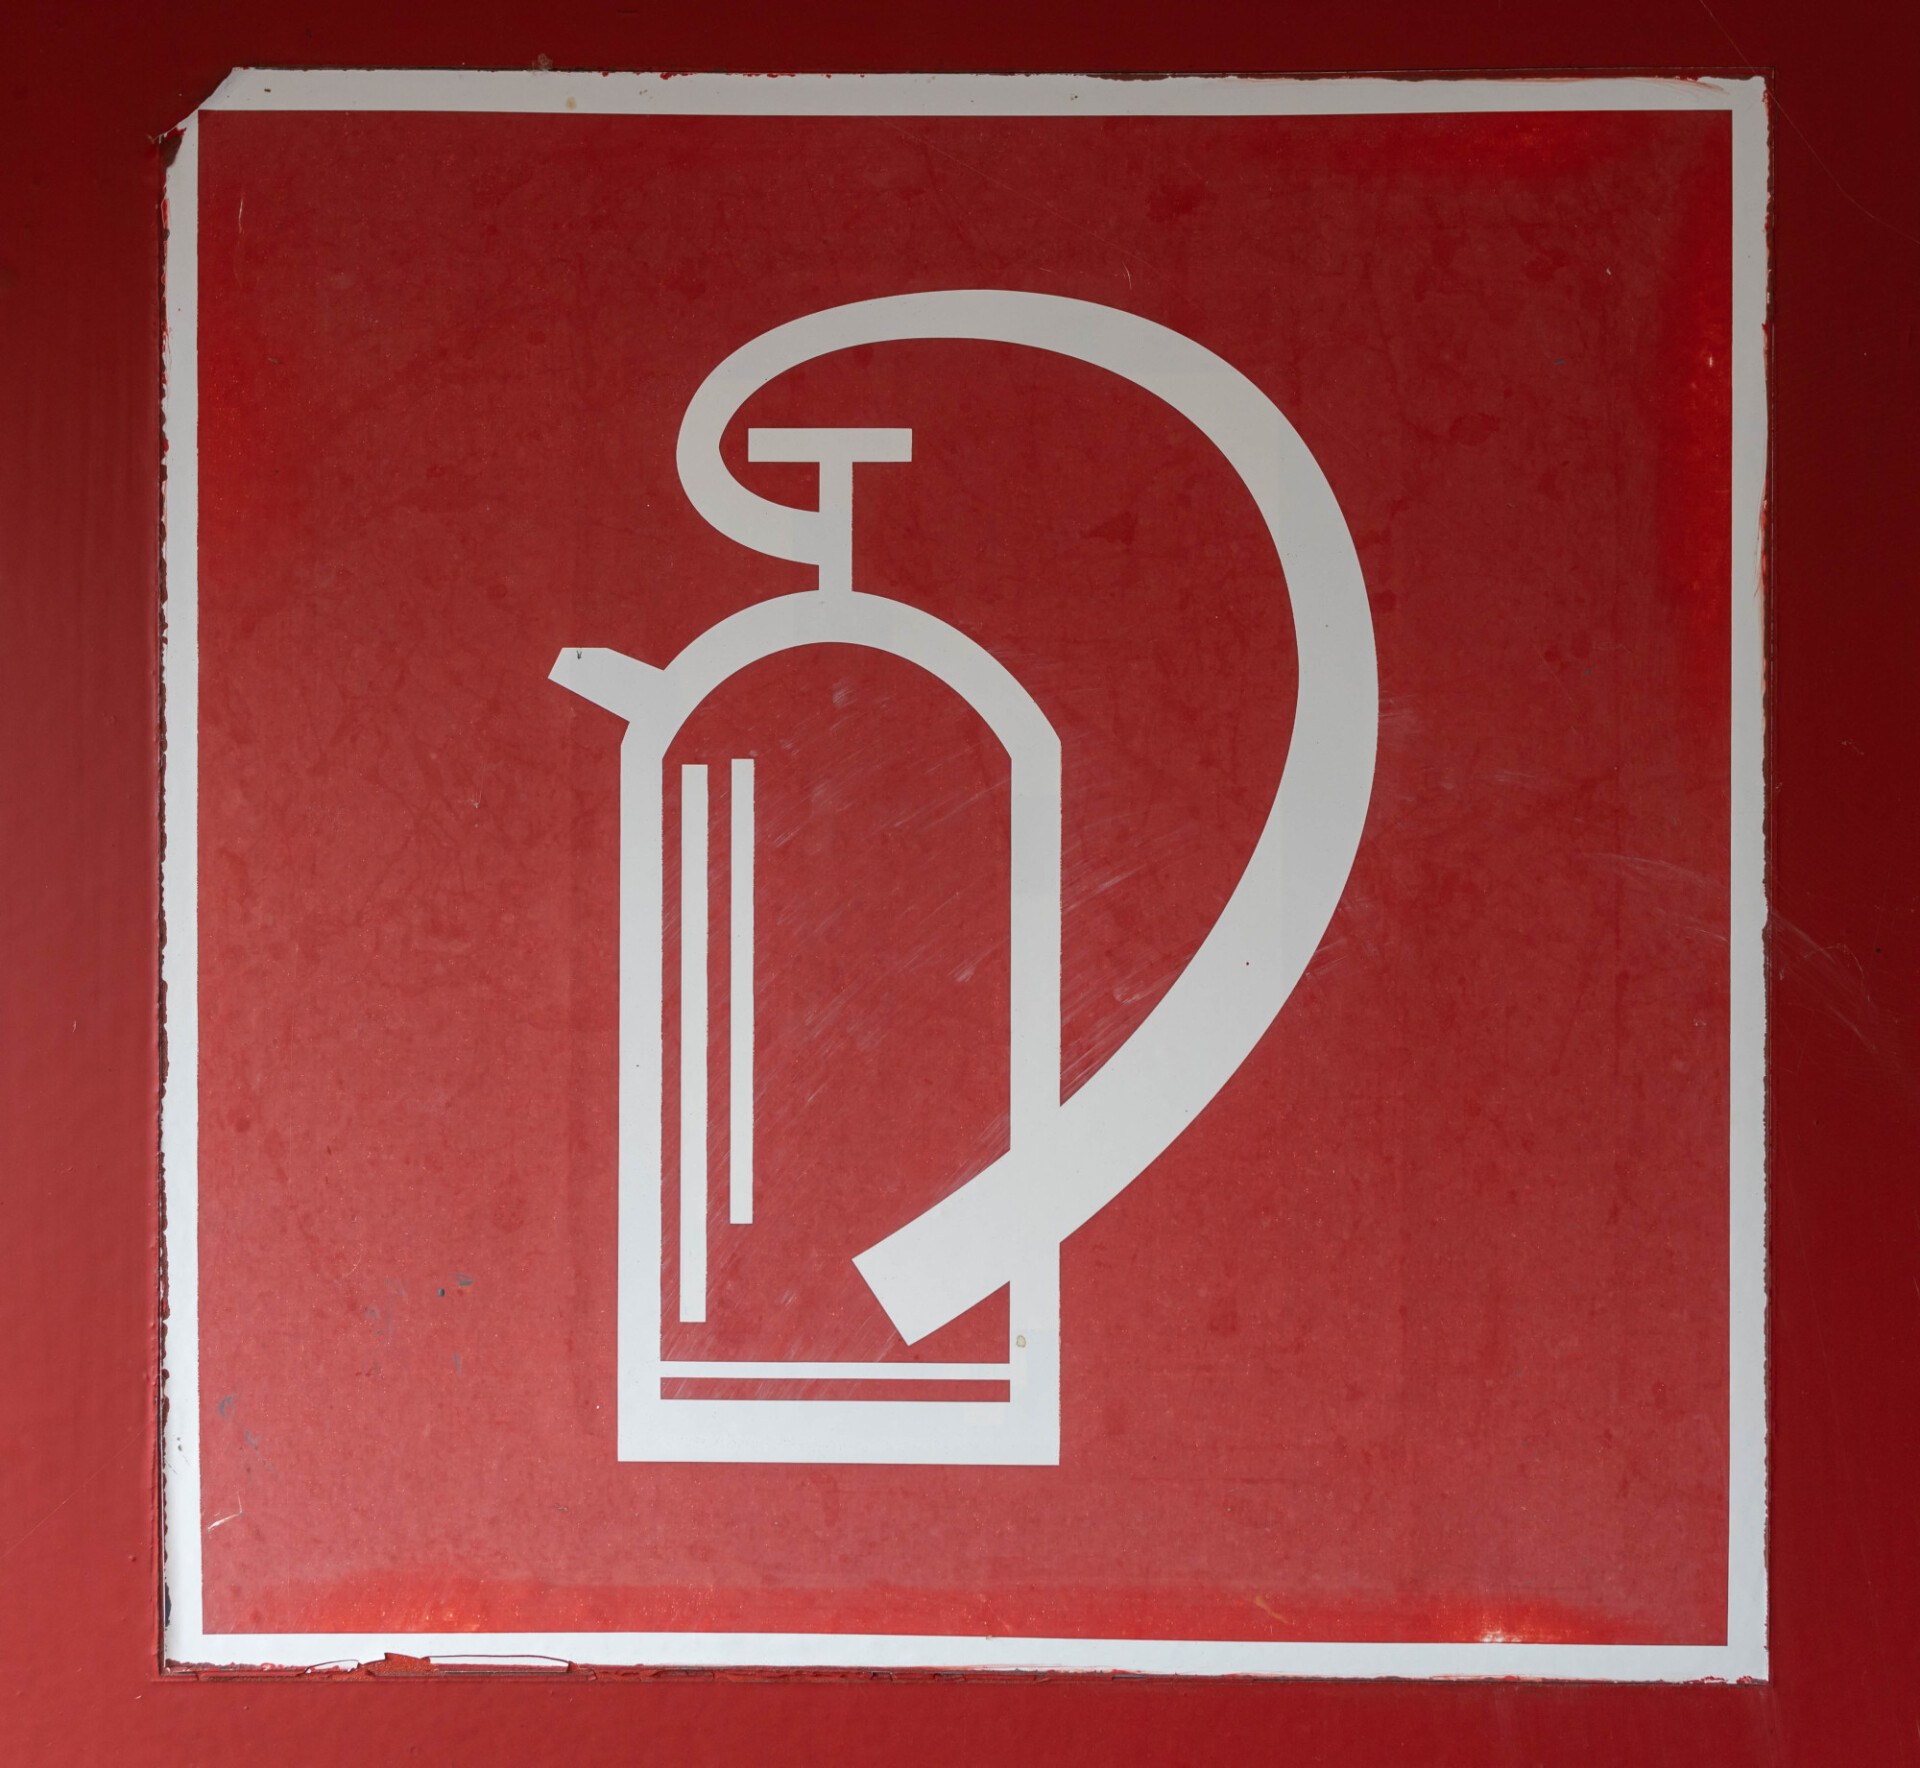 Fire extinguisher symbol